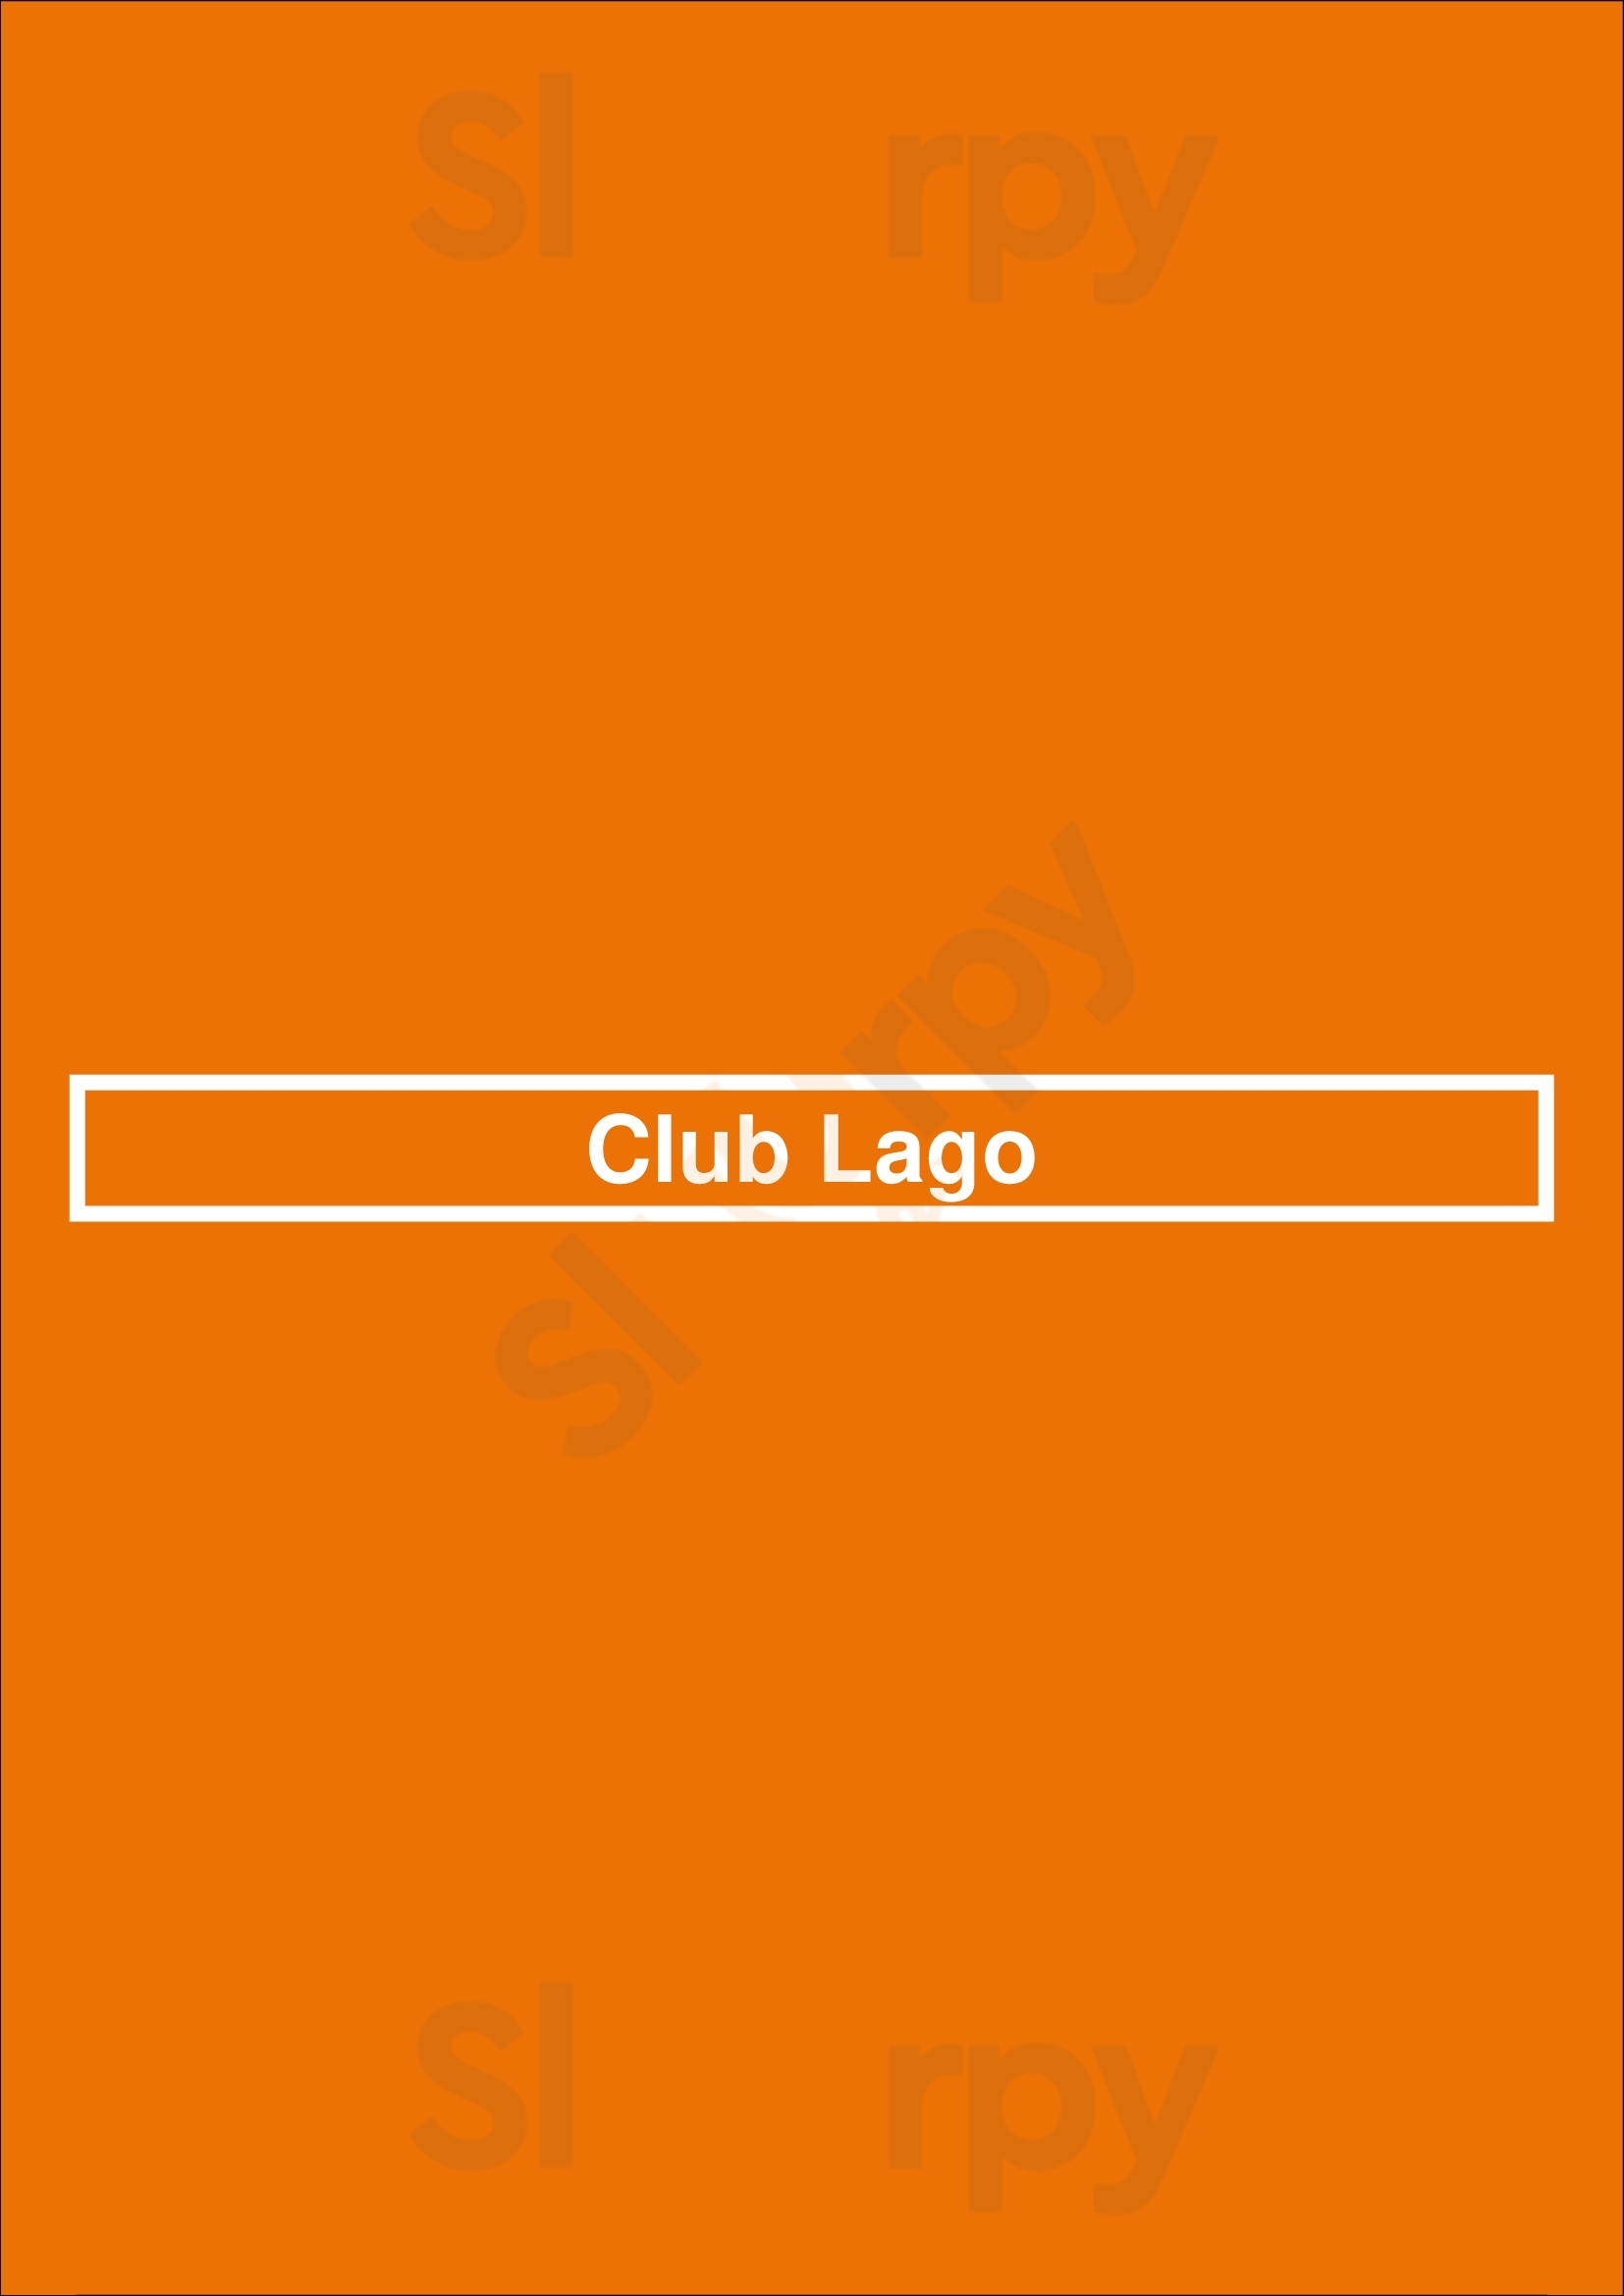 Club Lago Chicago Menu - 1